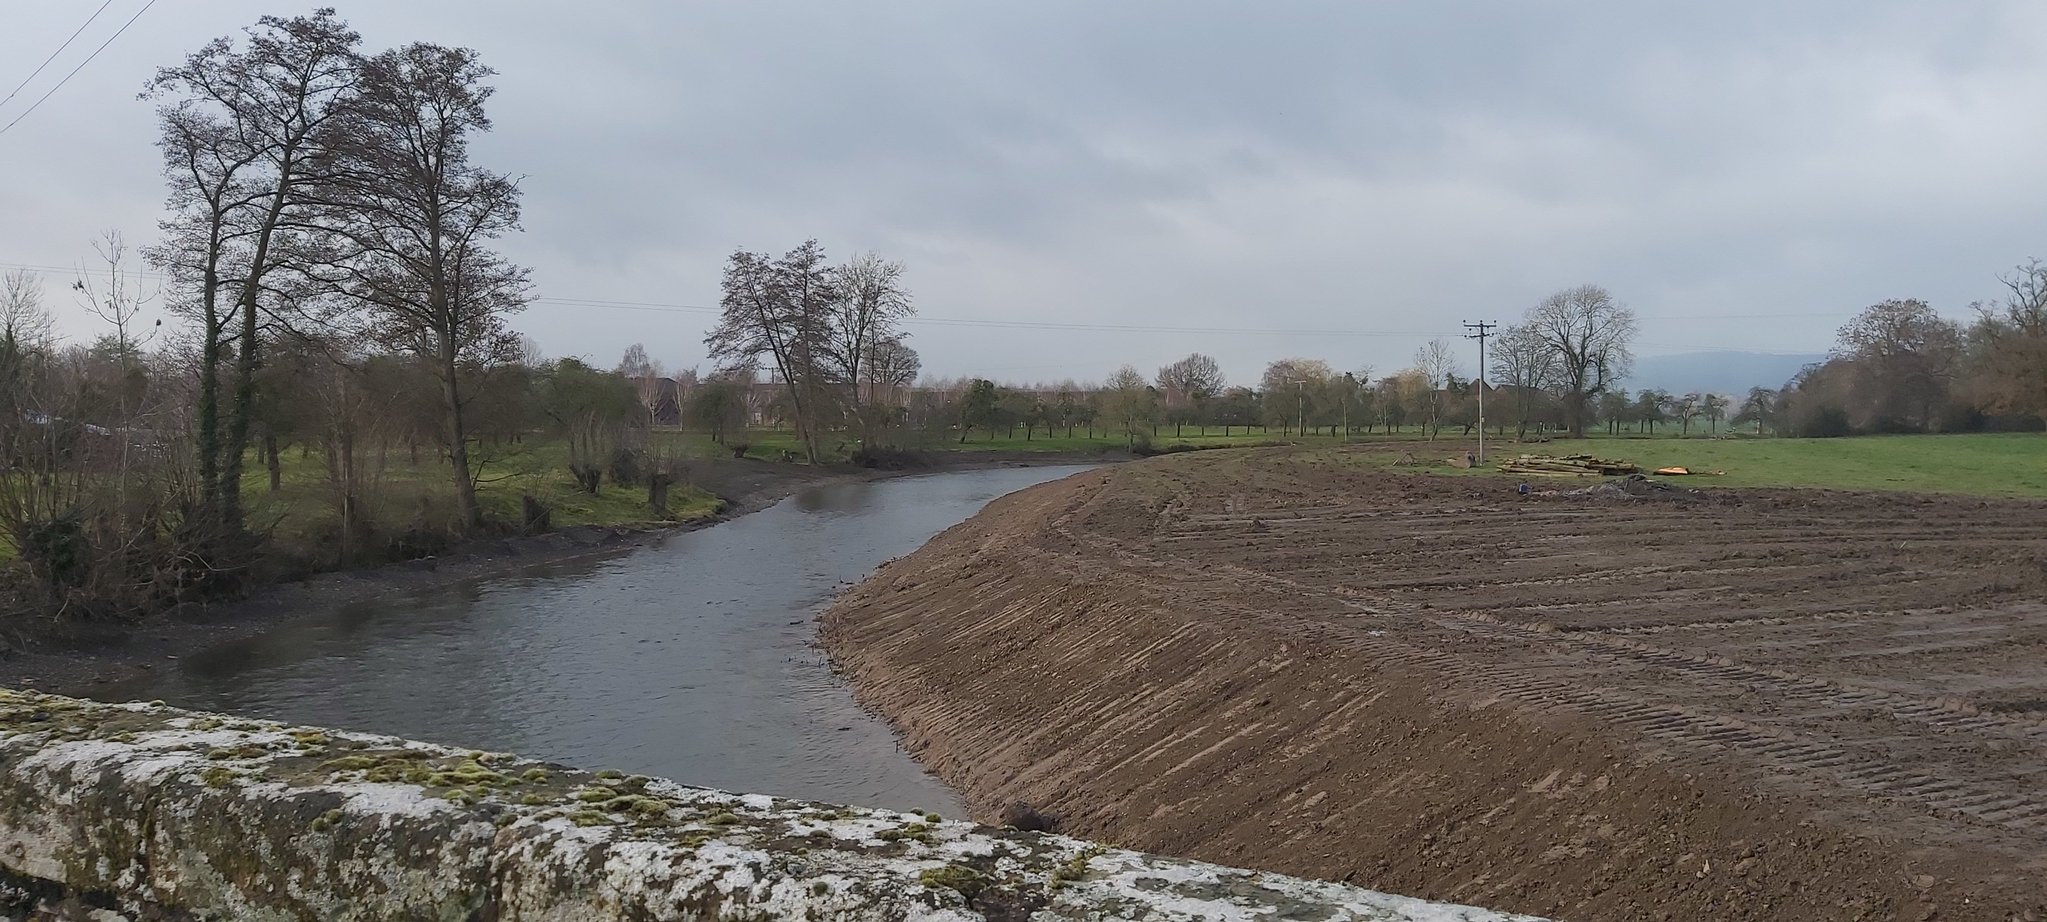 NEWS | Horror at destruction of nationally important UK river